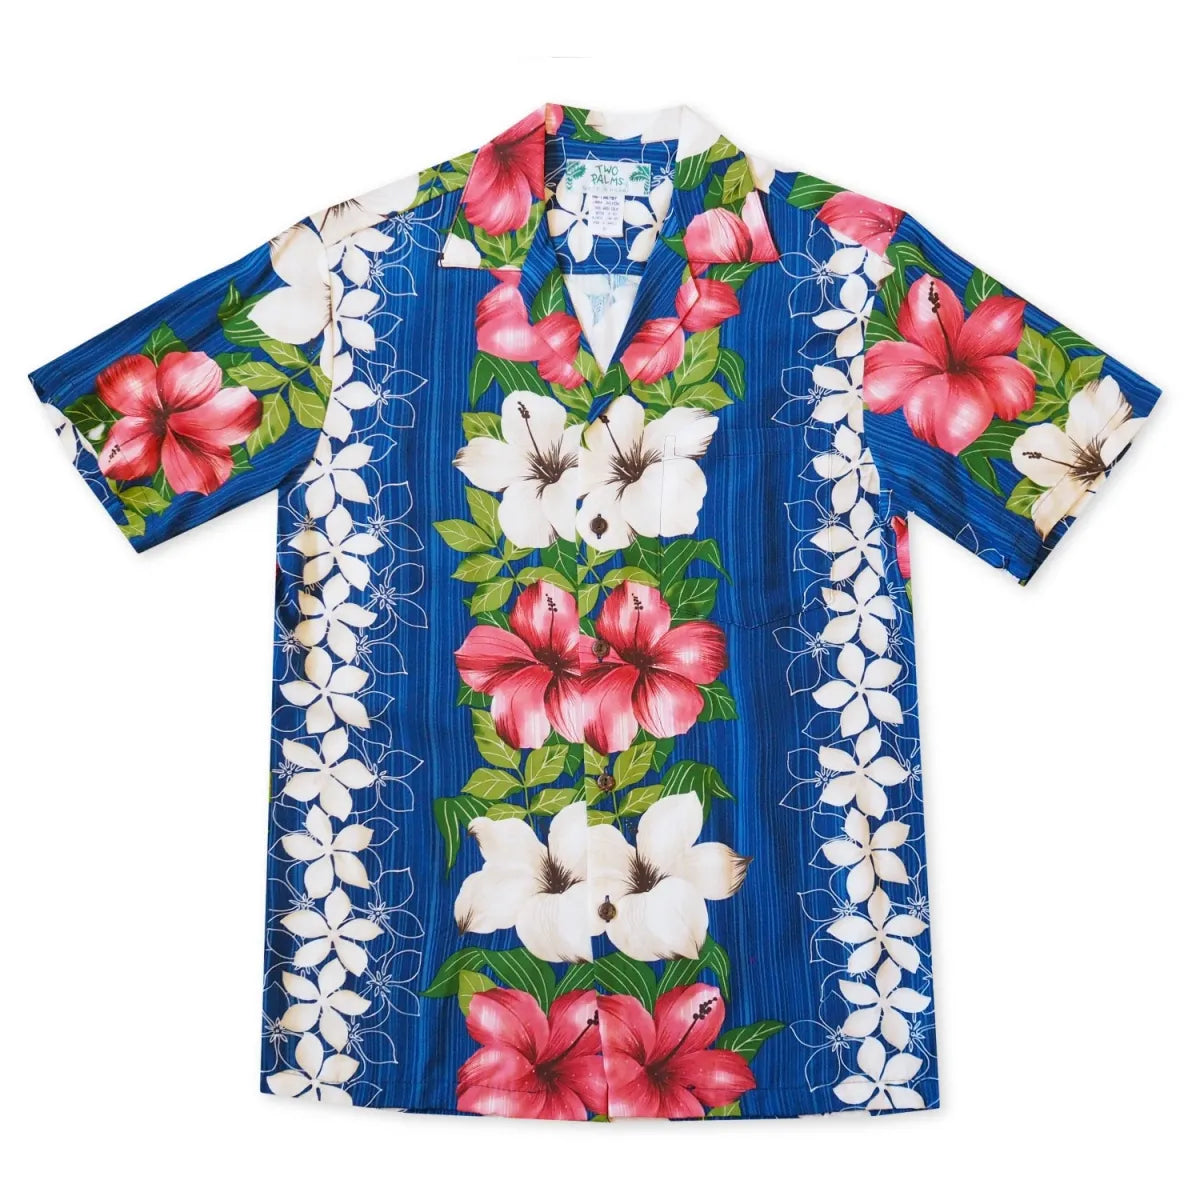 Vintage aloha blue hawaiian rayon shirt